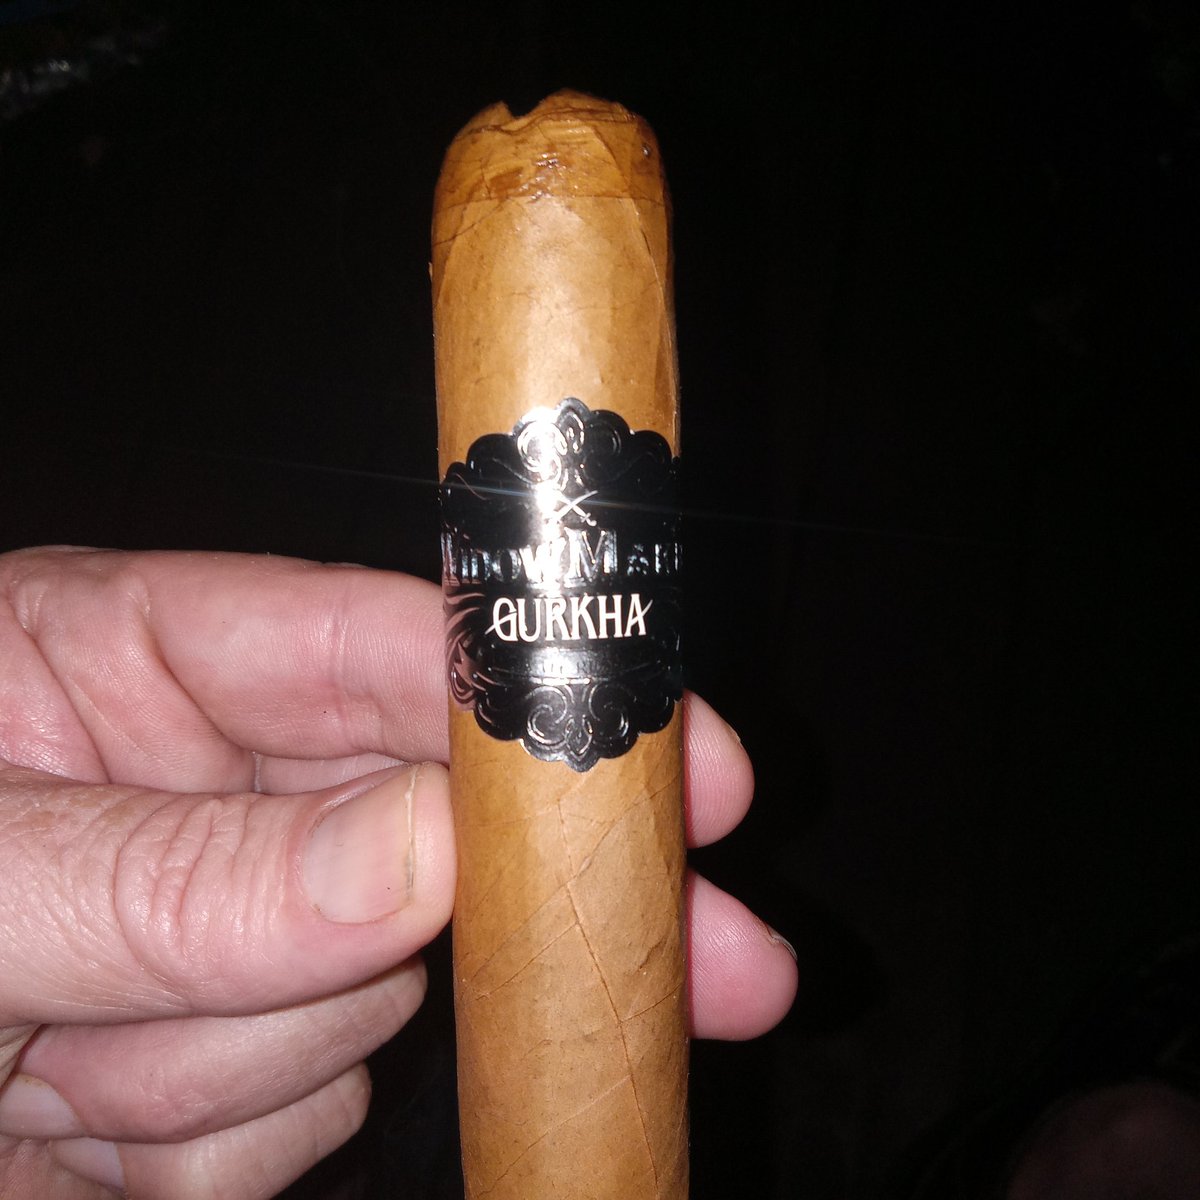 Gurkha Widow Maker Natural XO. #cigars #gurkhatopshelf
#cameroonbinderaged8years 
#dominicanfillersaged8years
#connecticutshadewrapperaged10years
#madeindominicanrepublic
#severethunderstormwatch